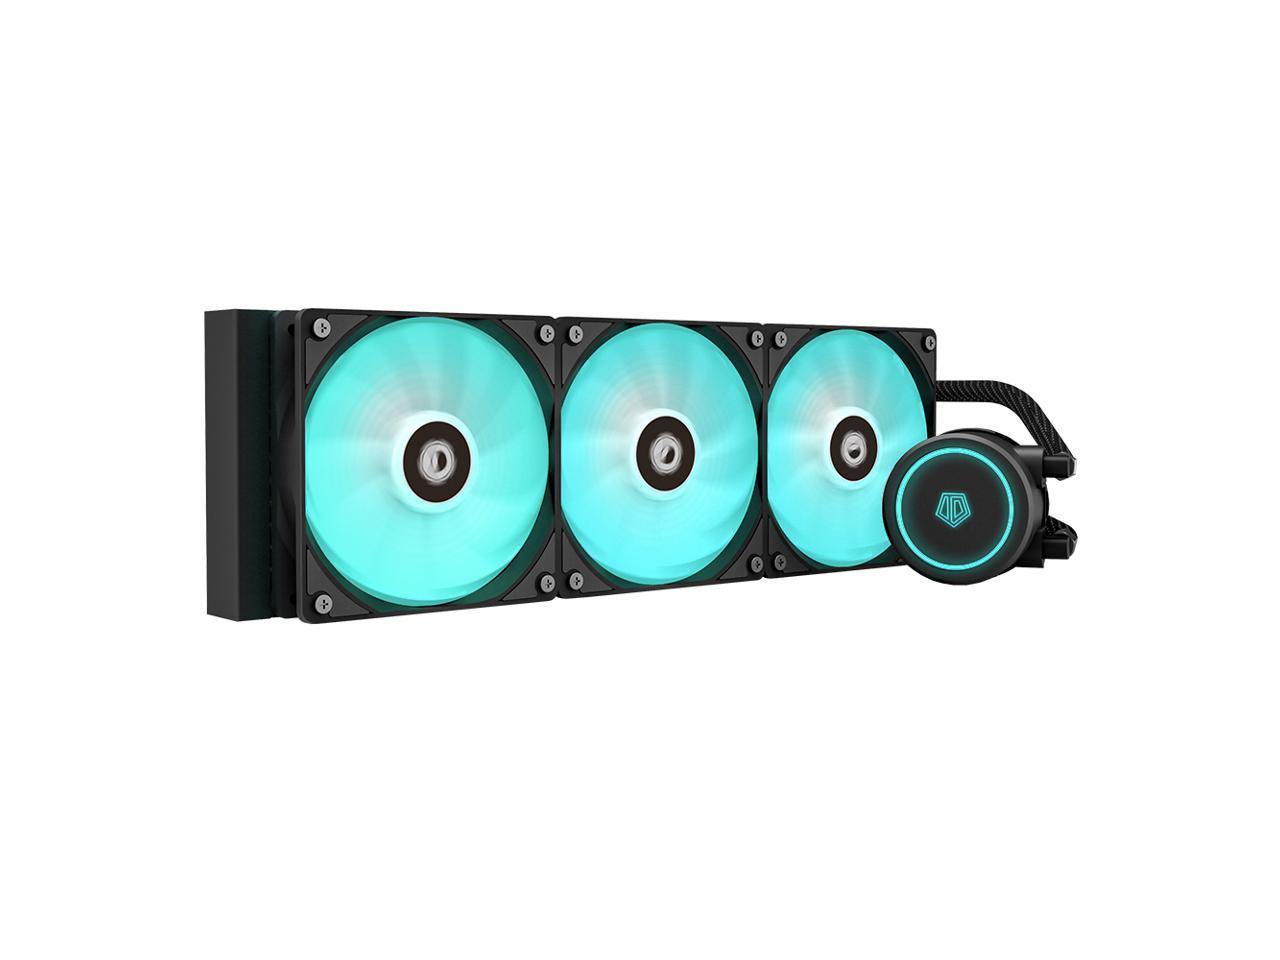 ID-COOLING AURAFLOW X 360 CPU Water Cooler RGB AIO Cooler 360mm CPU Liquid  Cooler 3x120mm RGB Fan, Intel 115X/2066, AMD TR4/AM4